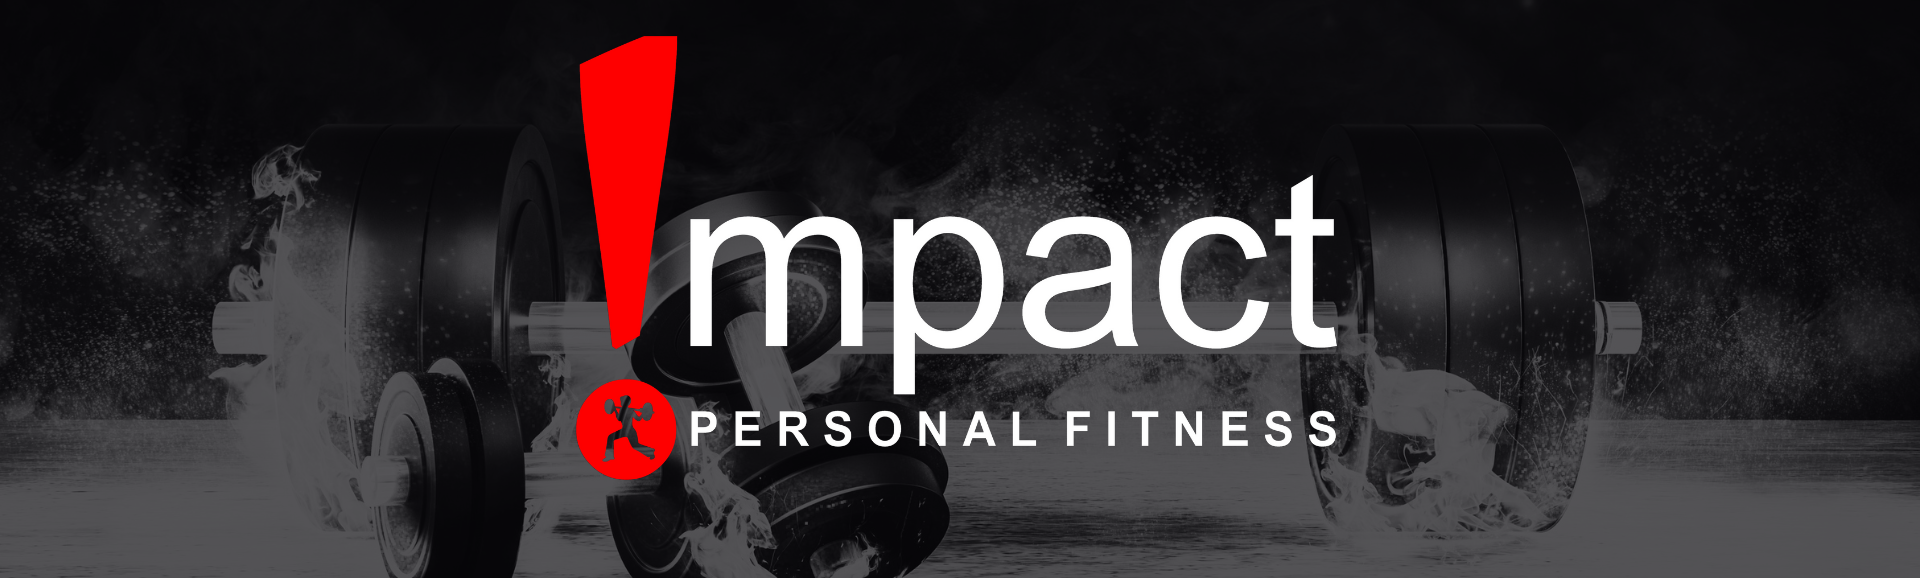 Impact Fitness Homepage Image